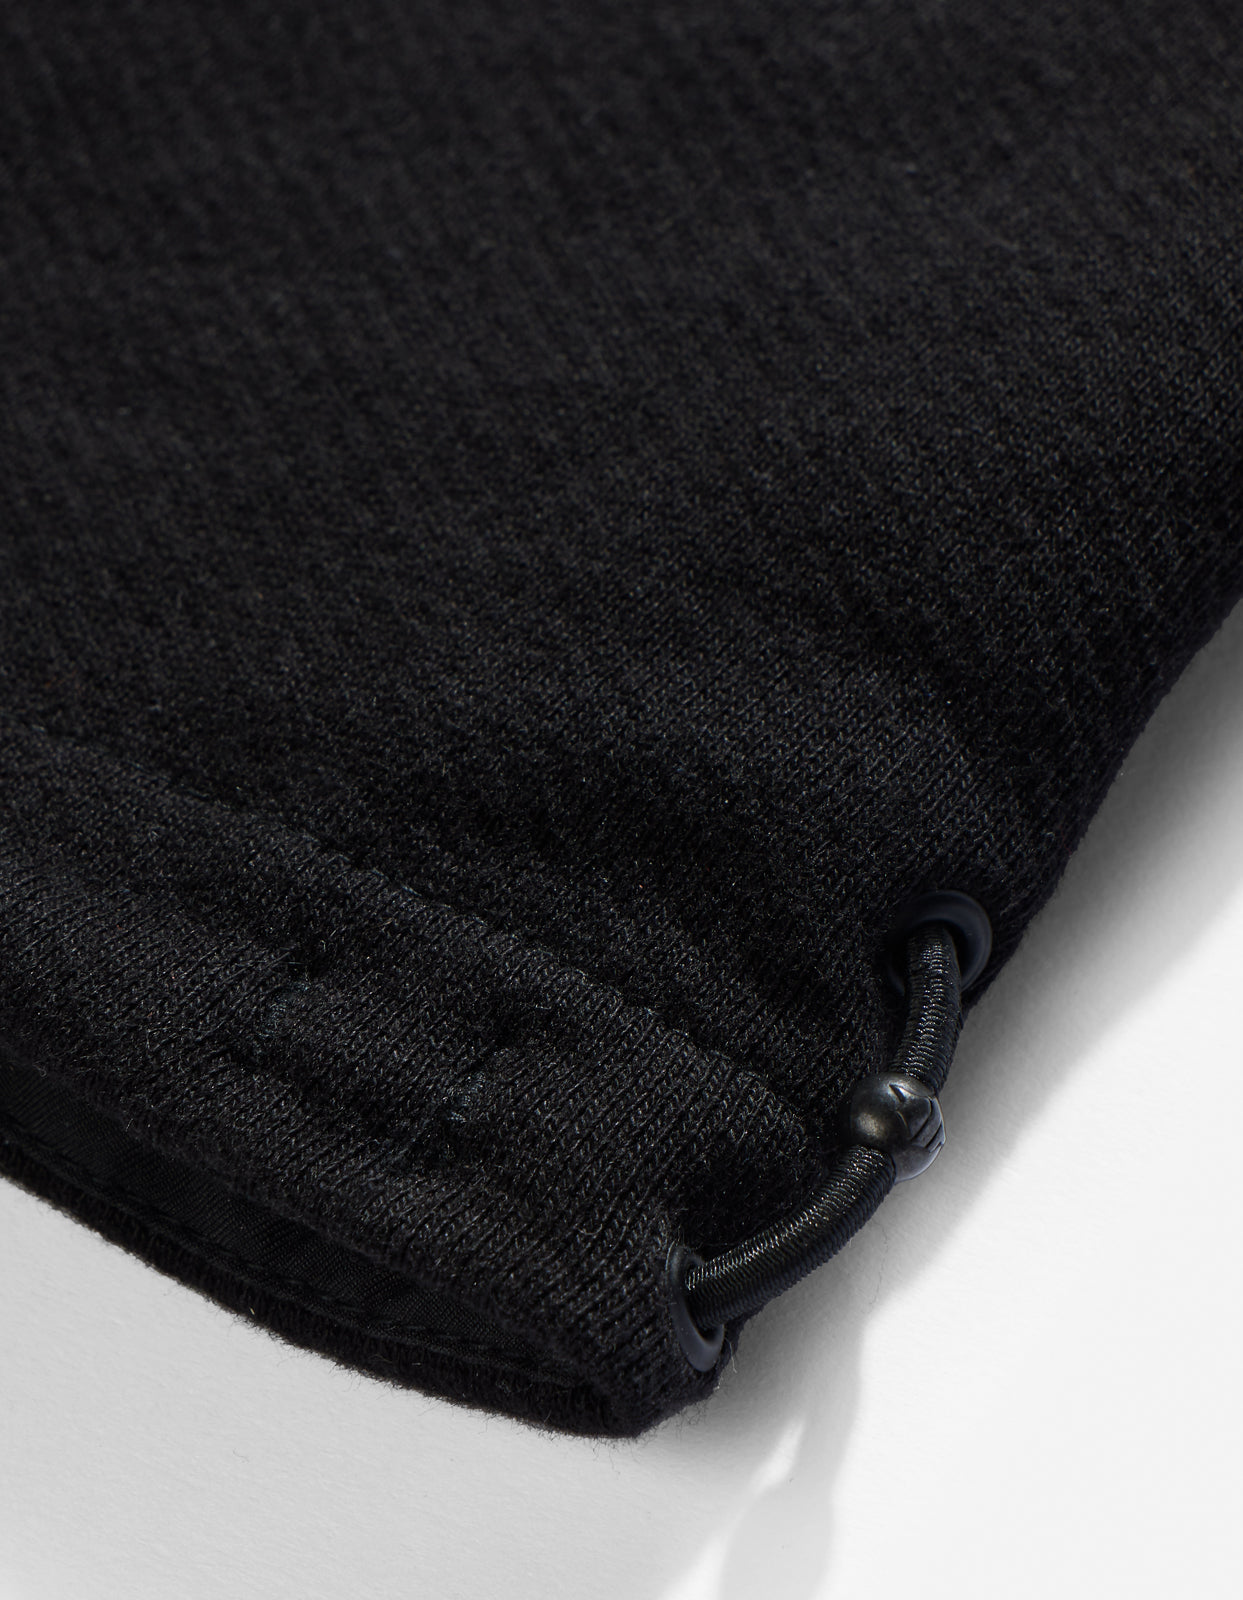 4554 Articulated Shinobi Sweatpants Black/Black